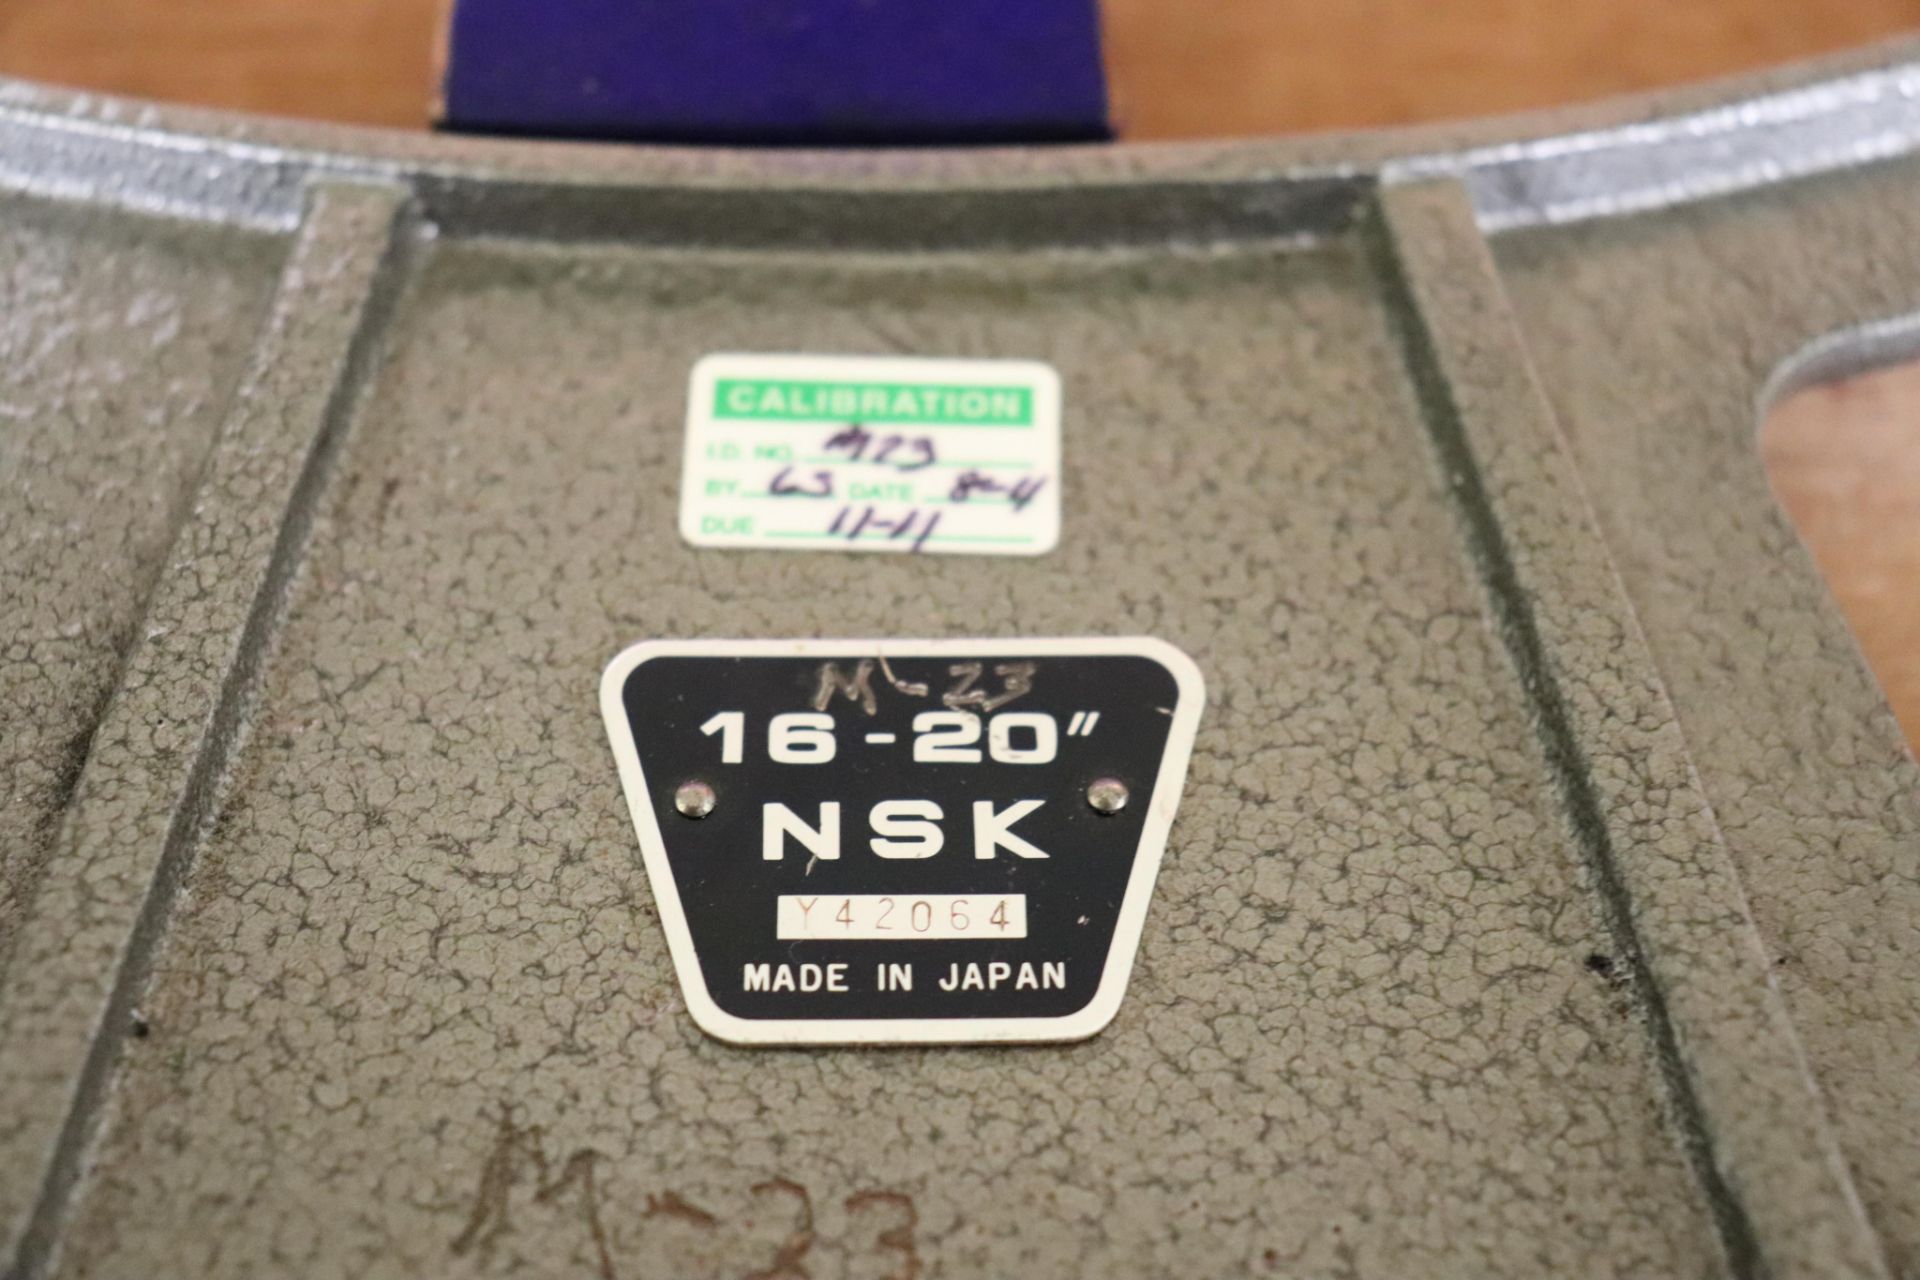 NSK 16" - 20" Micrometer - Image 3 of 4